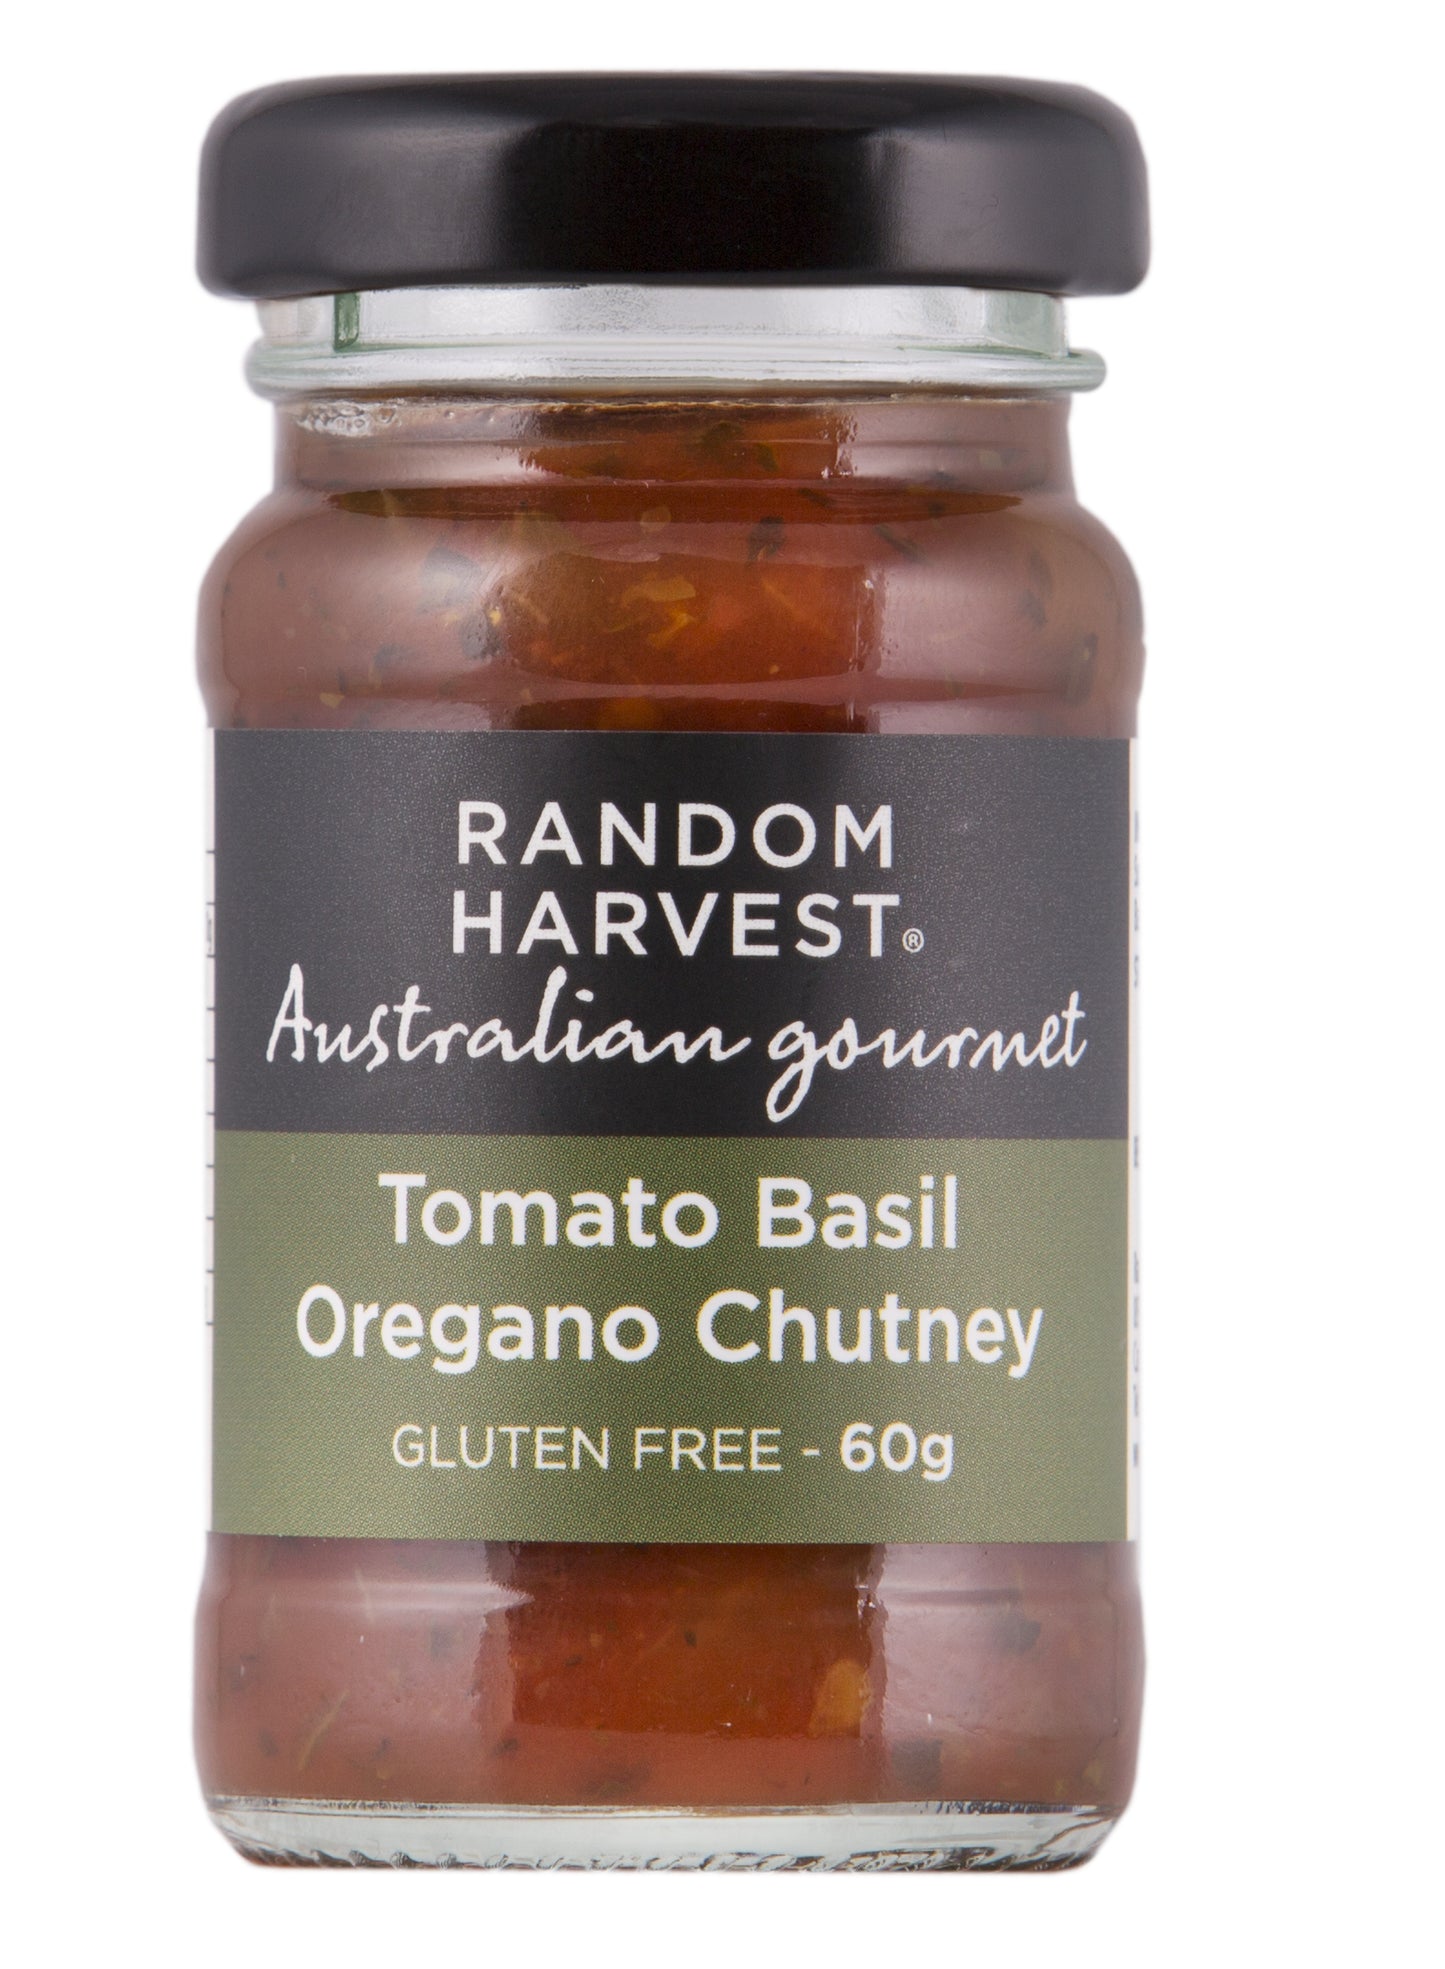 Tomato Basil Oregano Chutney